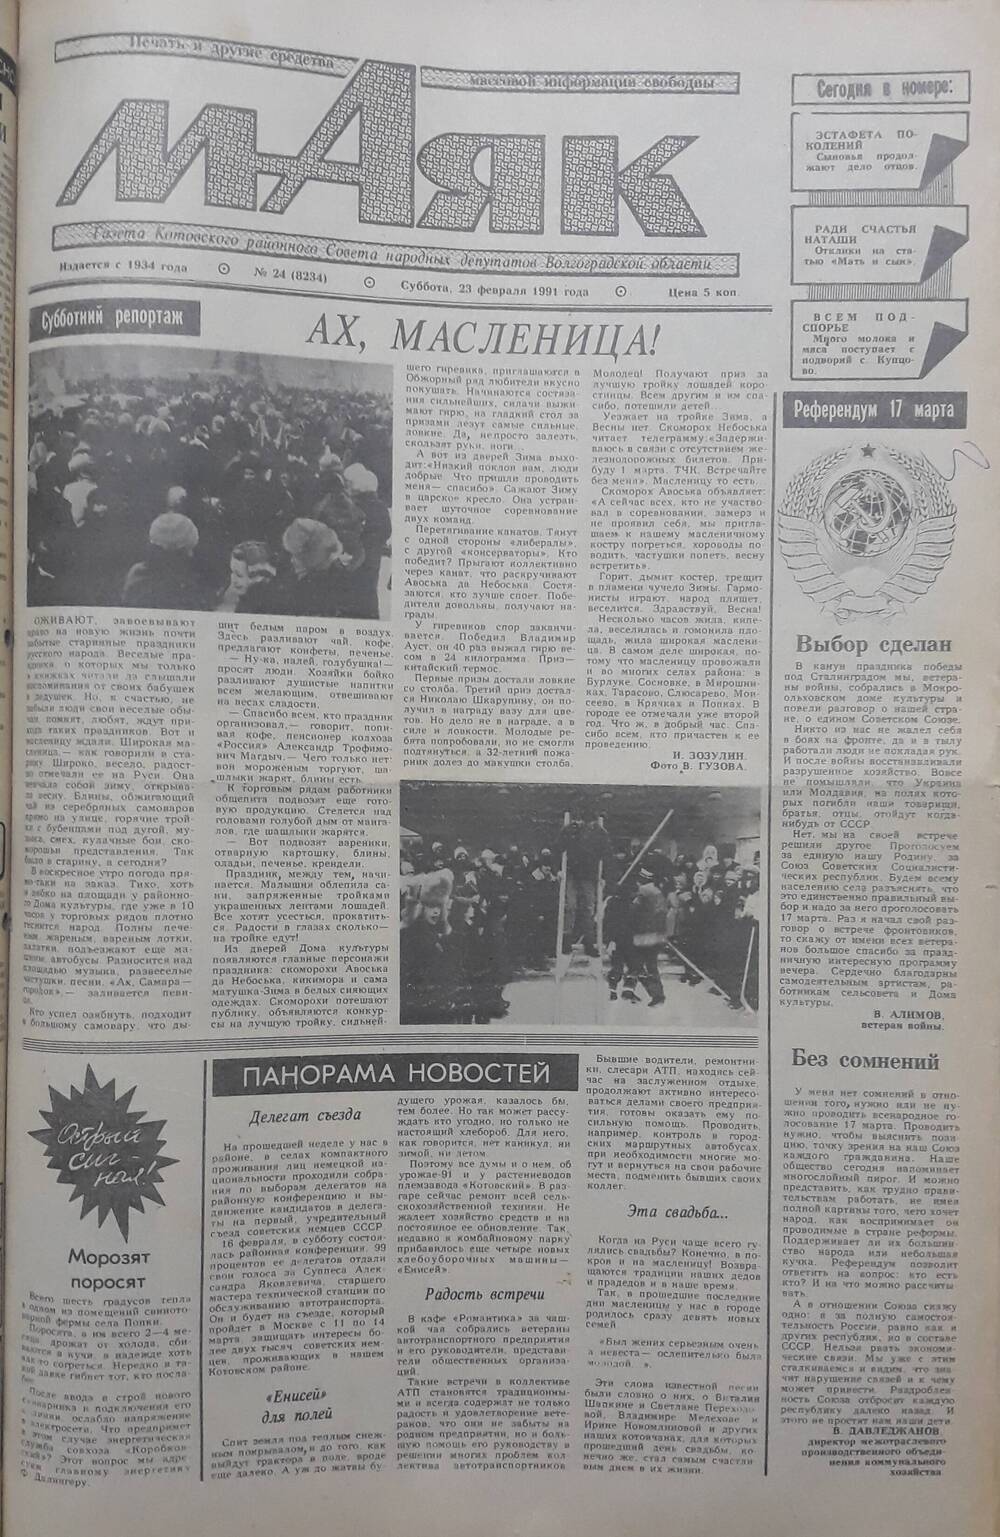 Газета Маяк № 24 (8234). Суббота 23 февраля 1991 года.